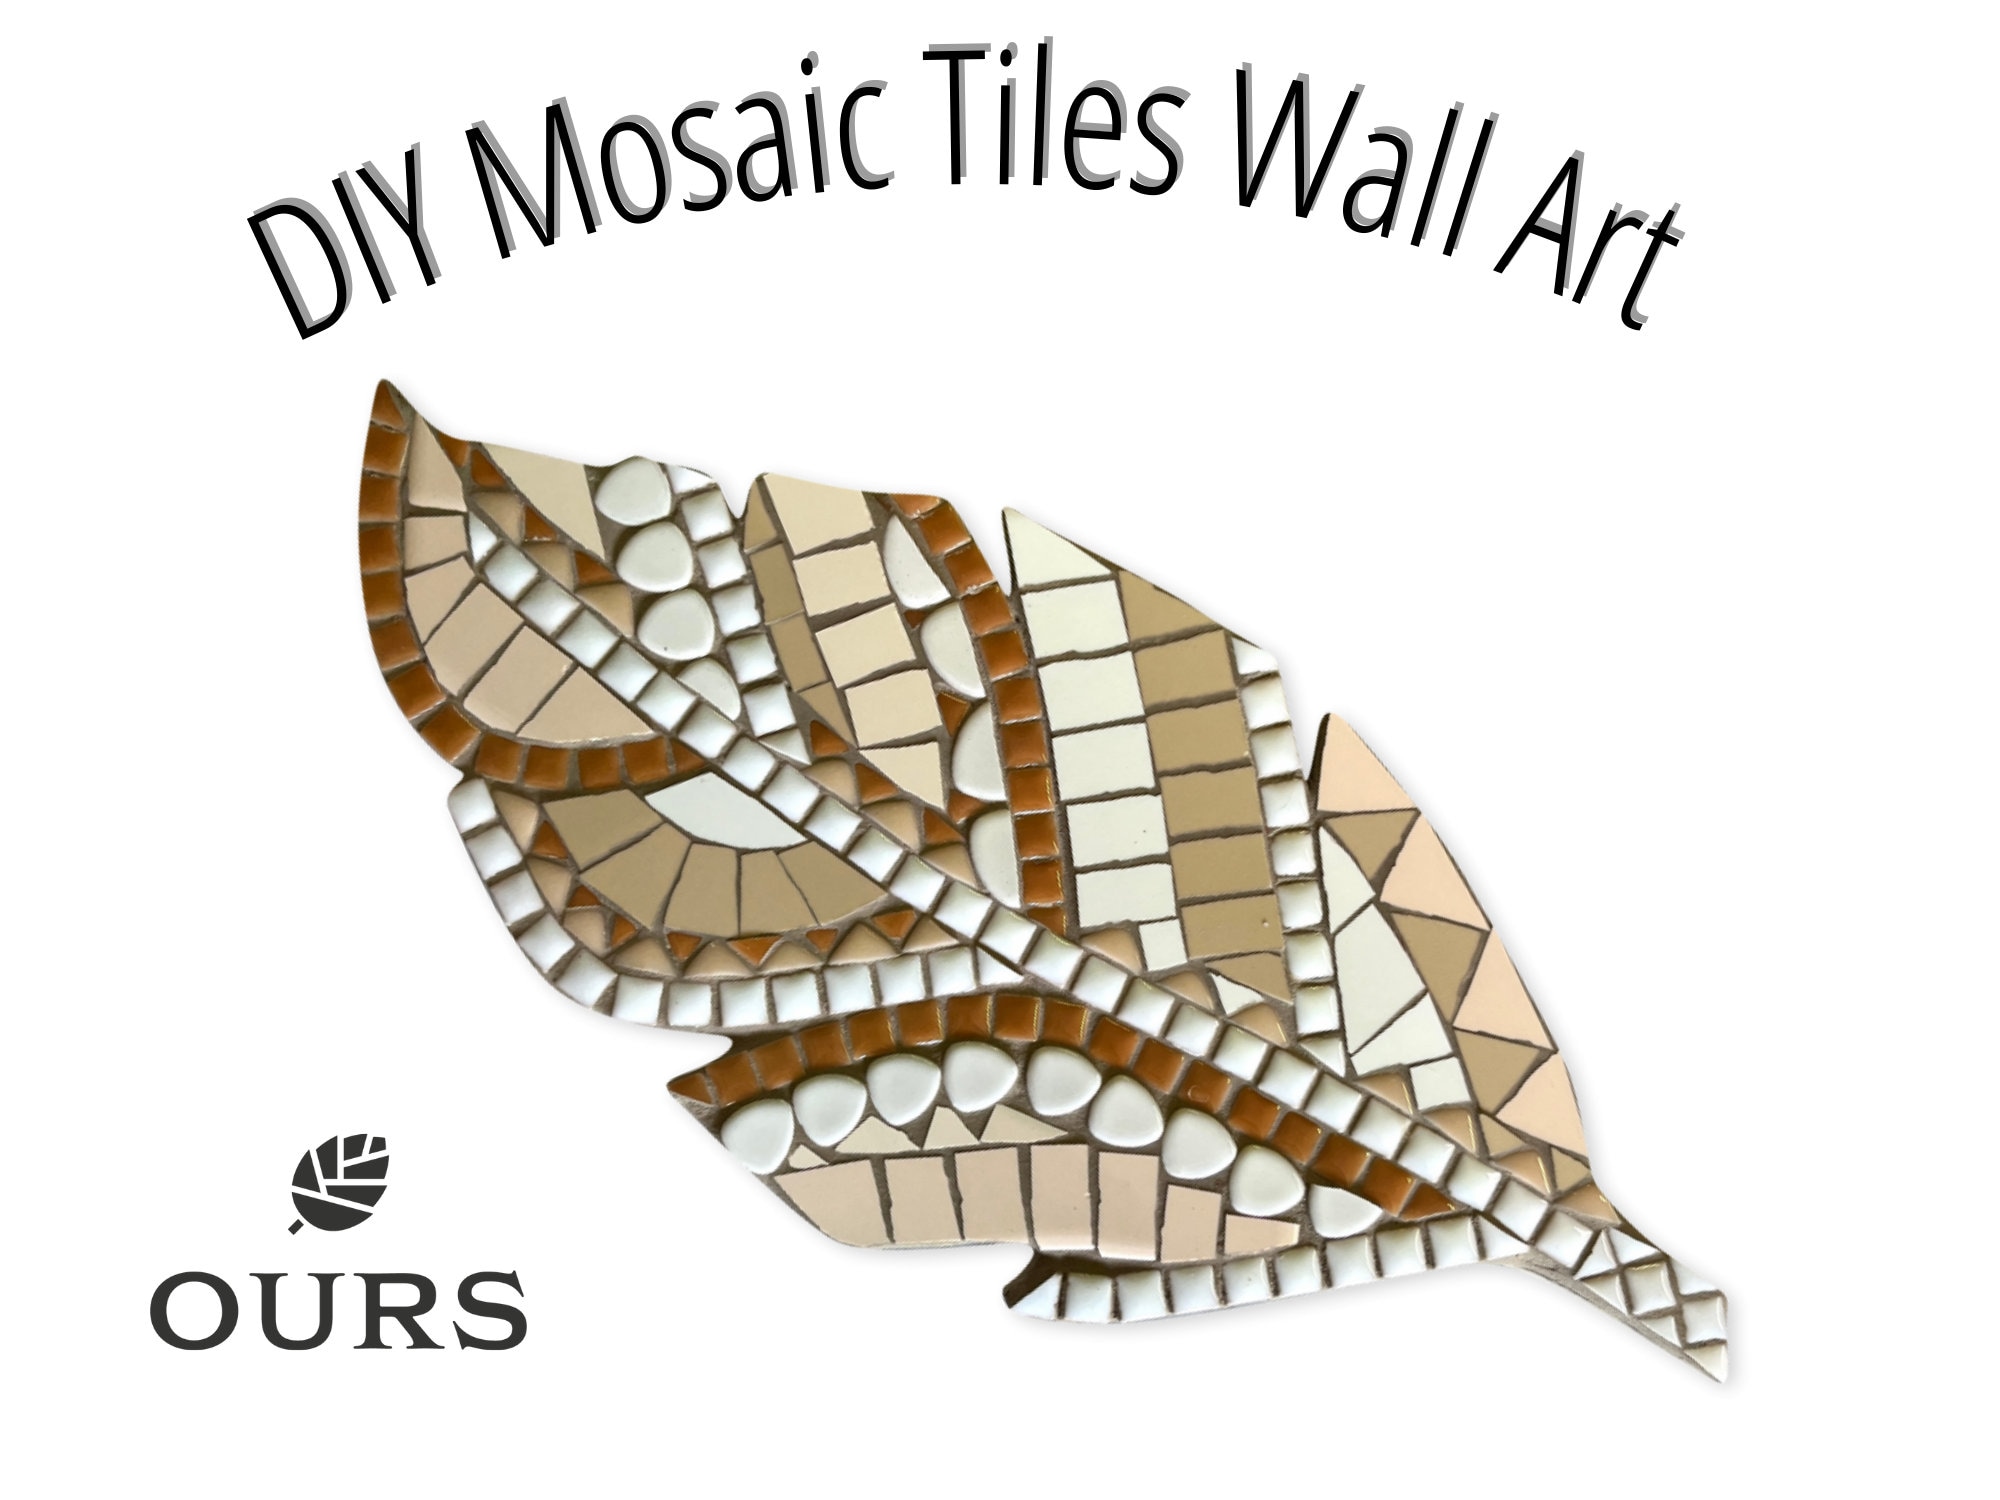 DIY Mosaic Tile Kit for Adults, Mosaic Art Kit, Adult Hobby Set, Craft